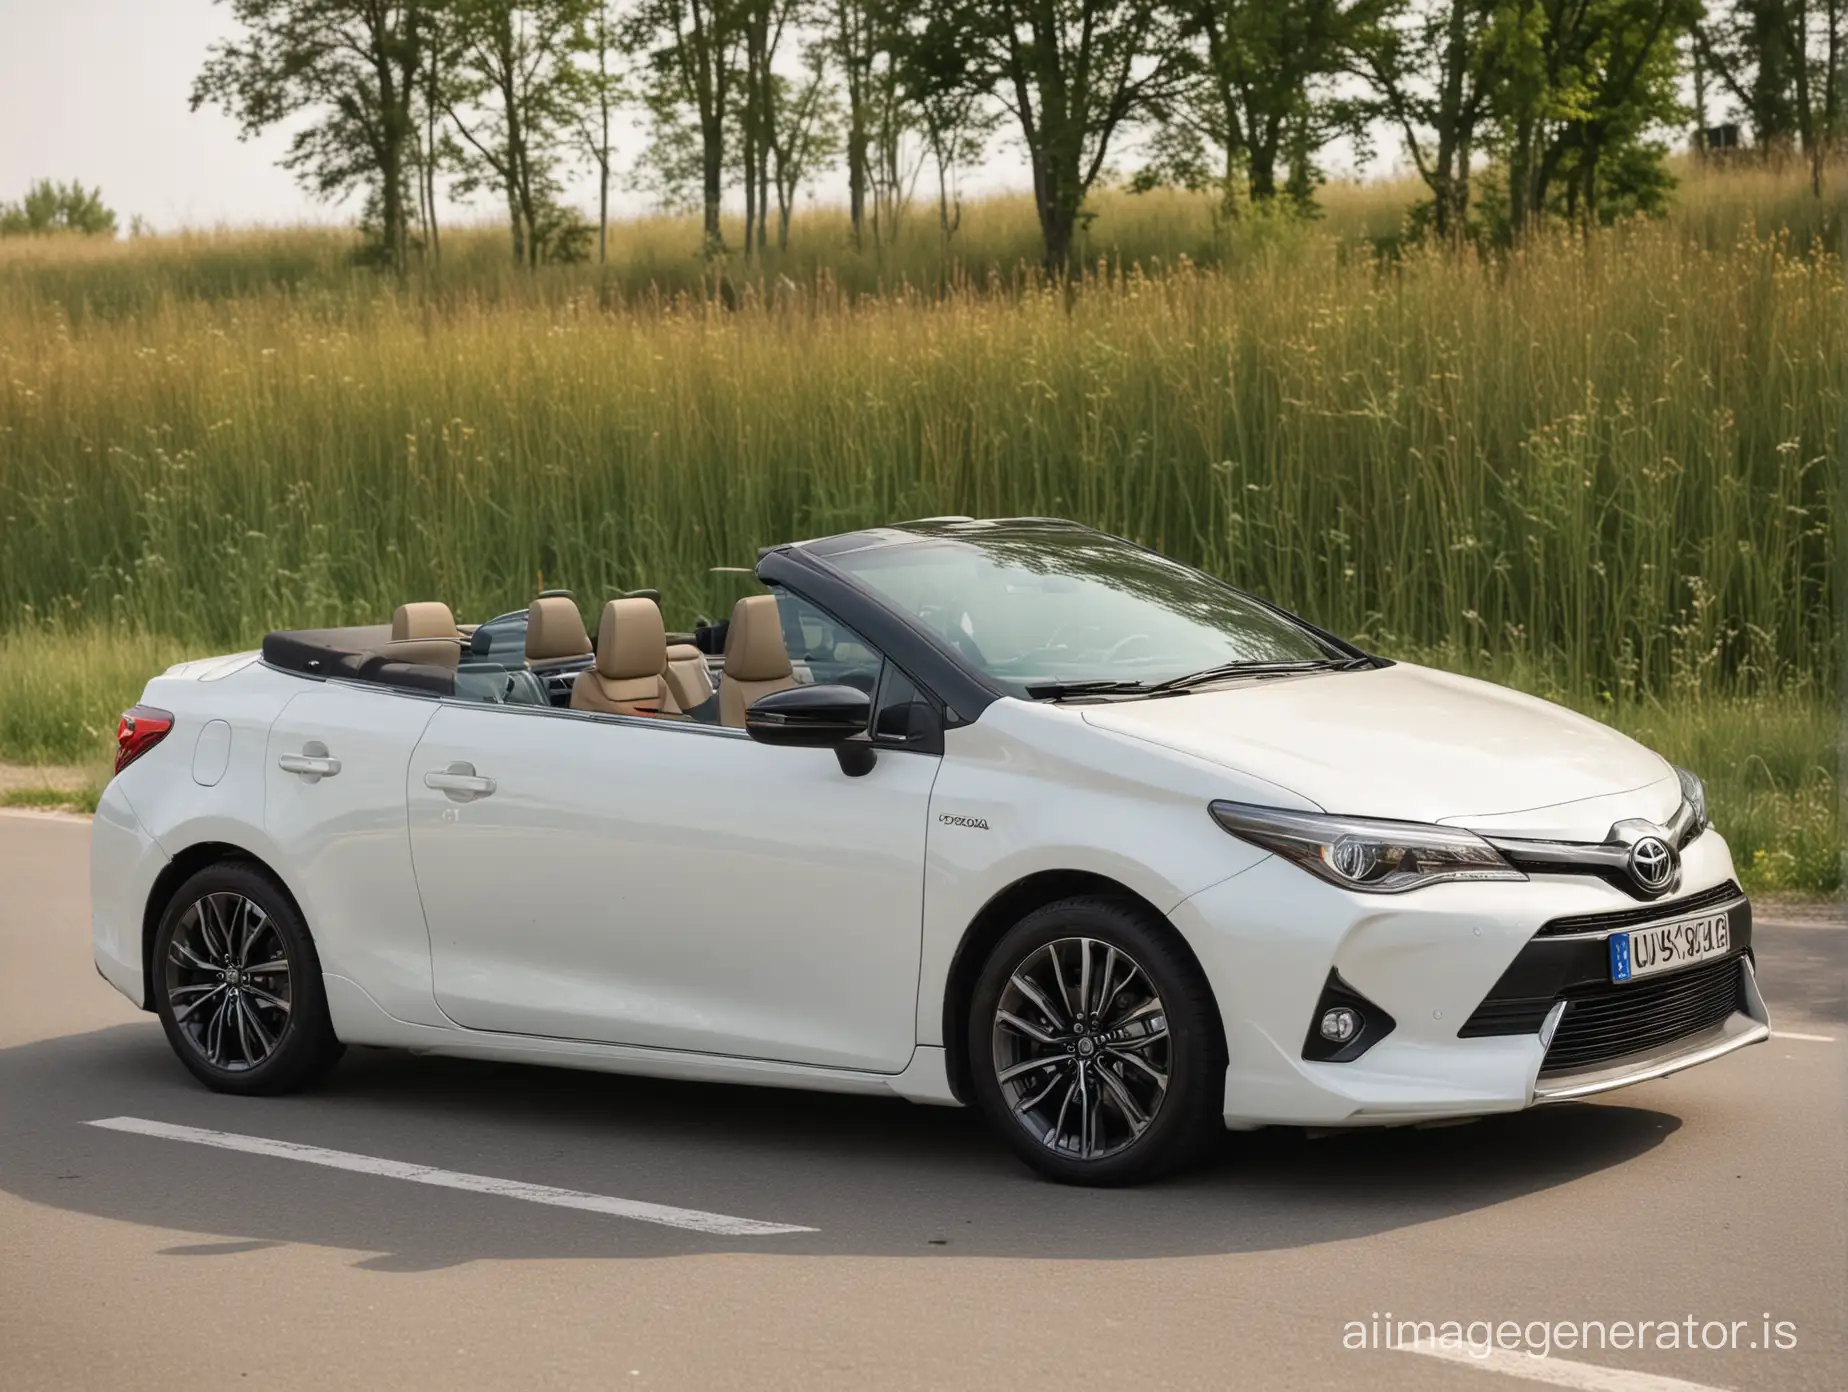 2018-Toyota-Auris-Convertible-in-a-Serene-Summer-Setting